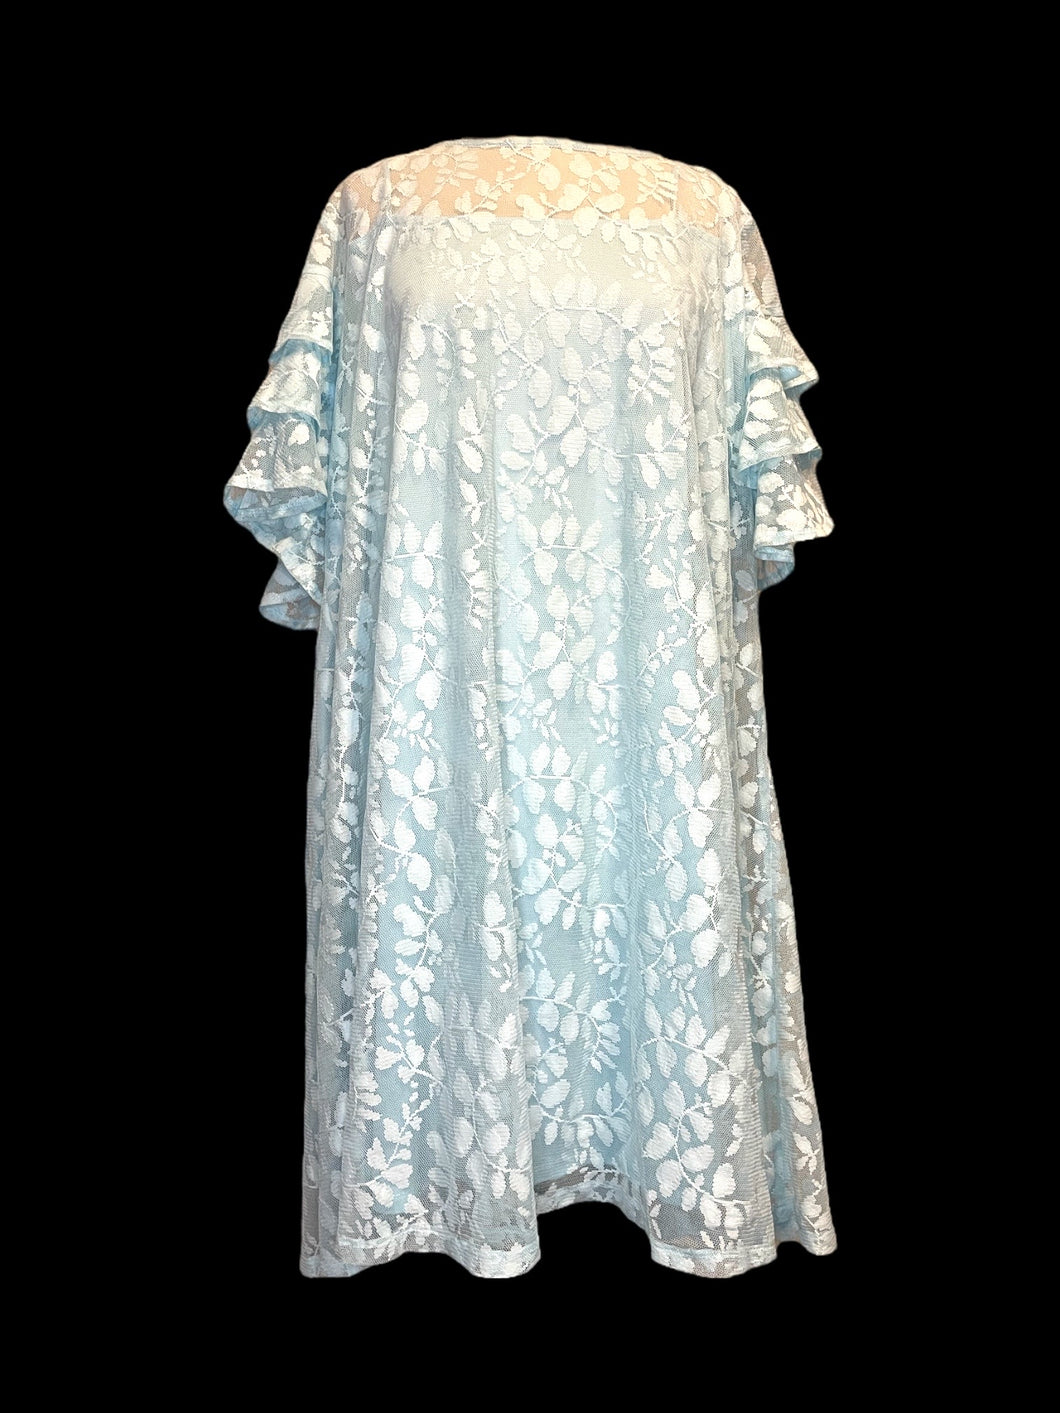 4X Light blue botanical lace half sleeve scoop neck dress w/ tiered ruffle sleeves, & clasp keyhole closure